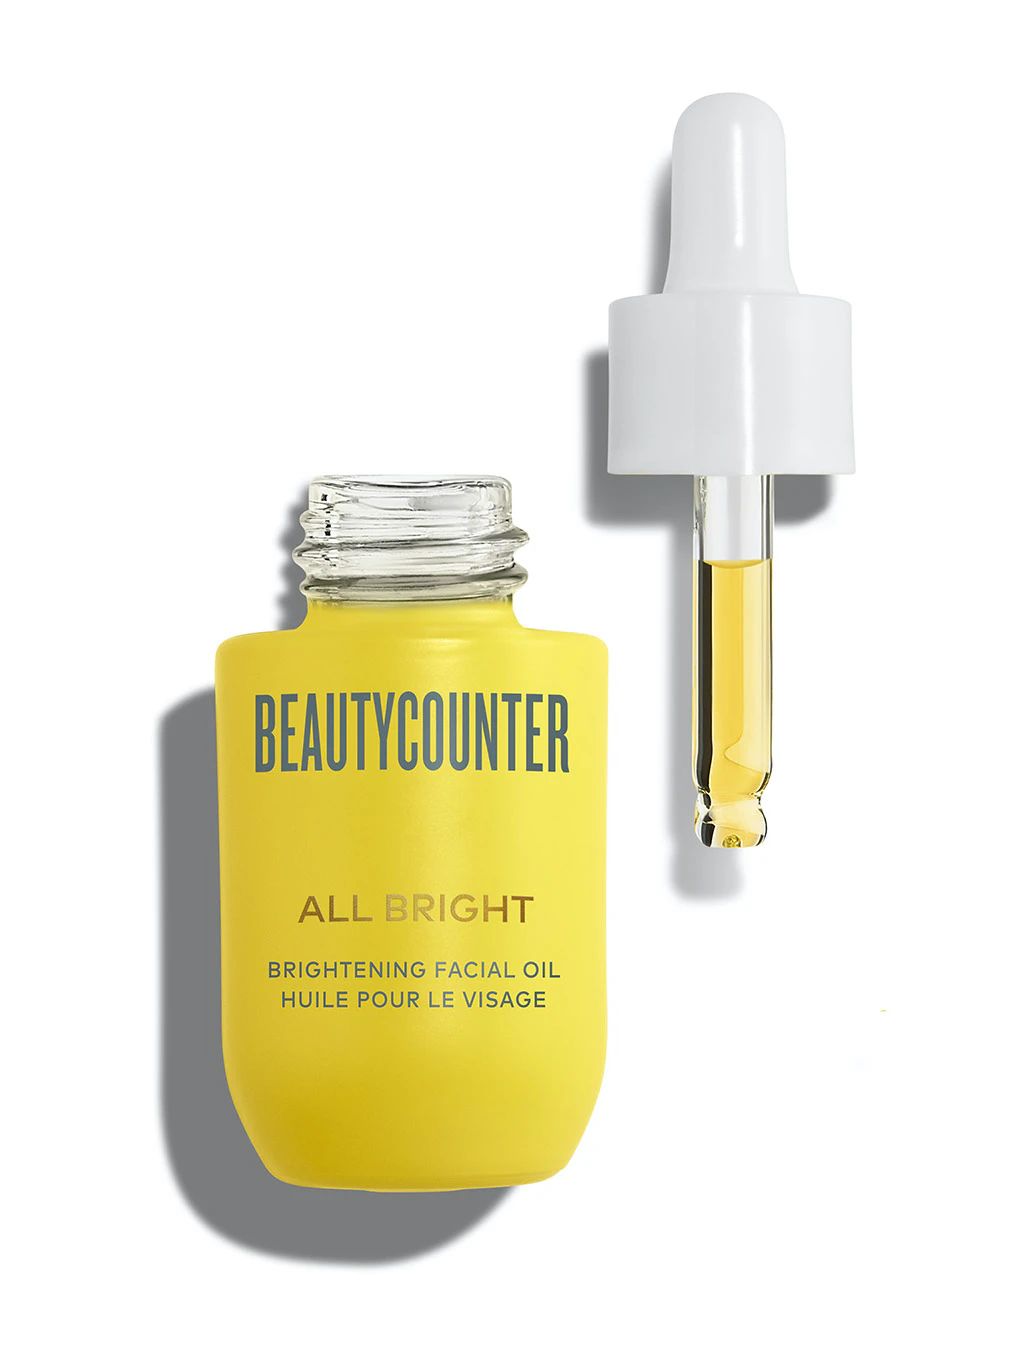 All Bright Brightening Facial Oil | Beautycounter.com